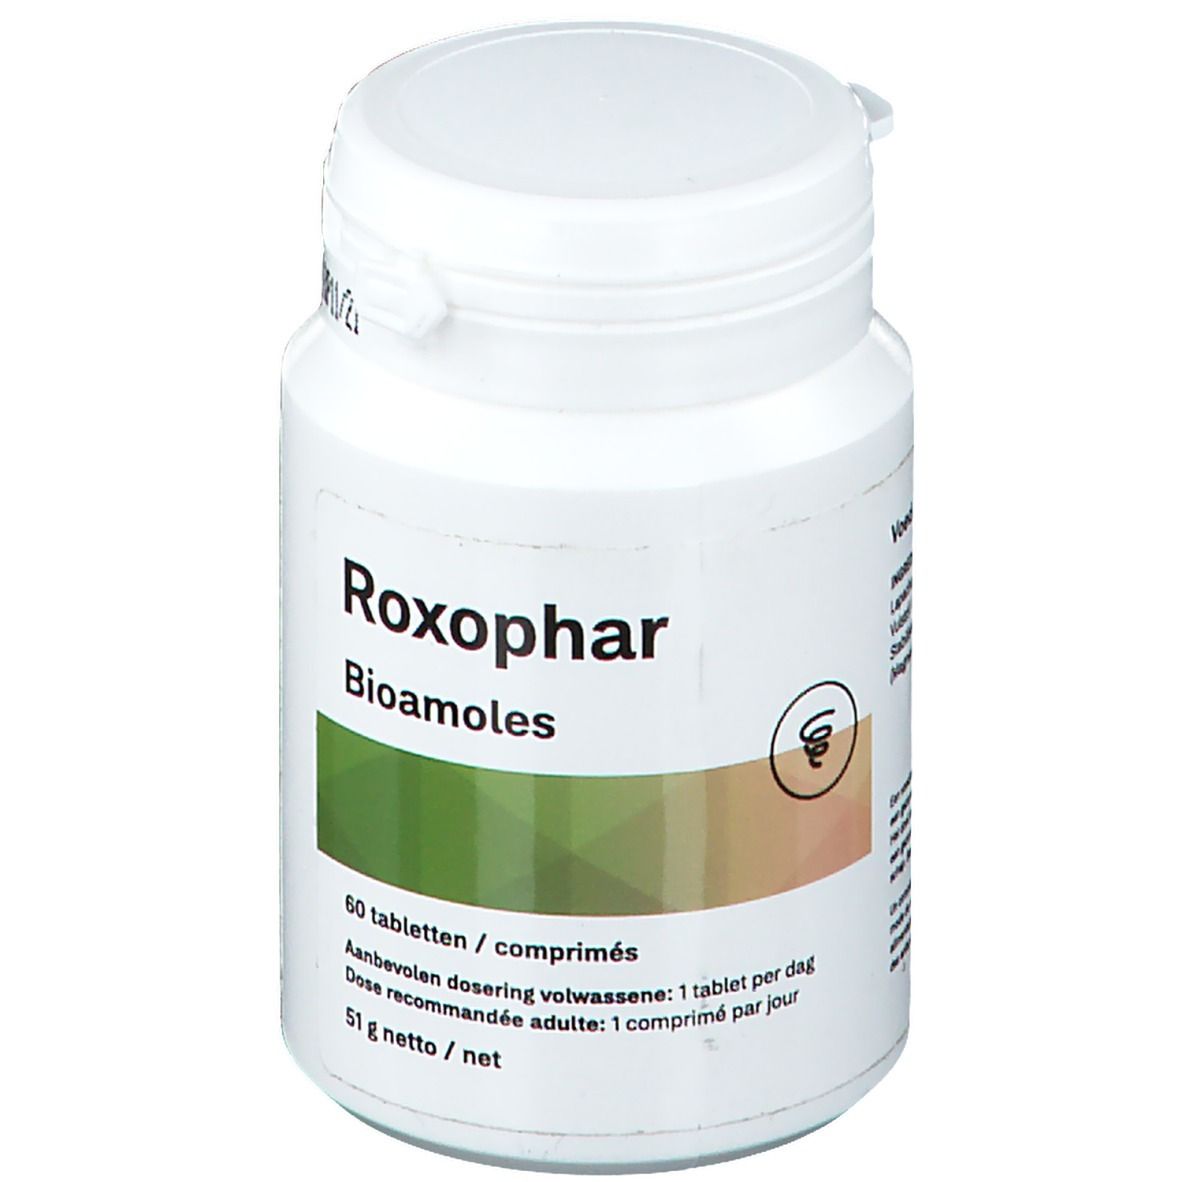 Bioamoles Roxophar